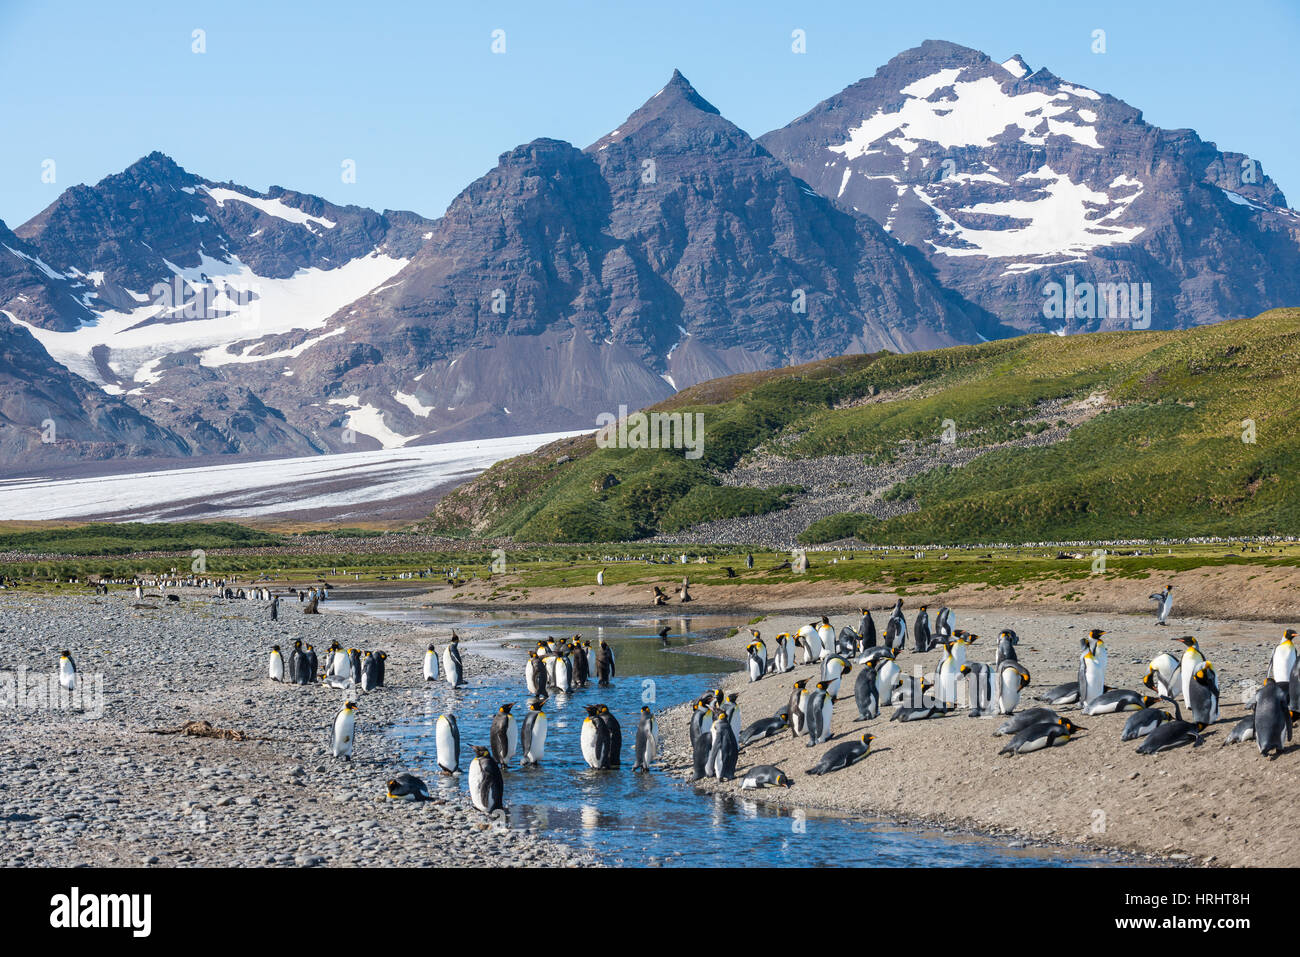 King penguins (Aptenodytes patagonicus) in beautiful scenery, Salisbury Plain, South Georgia, Antarctica Stock Photo